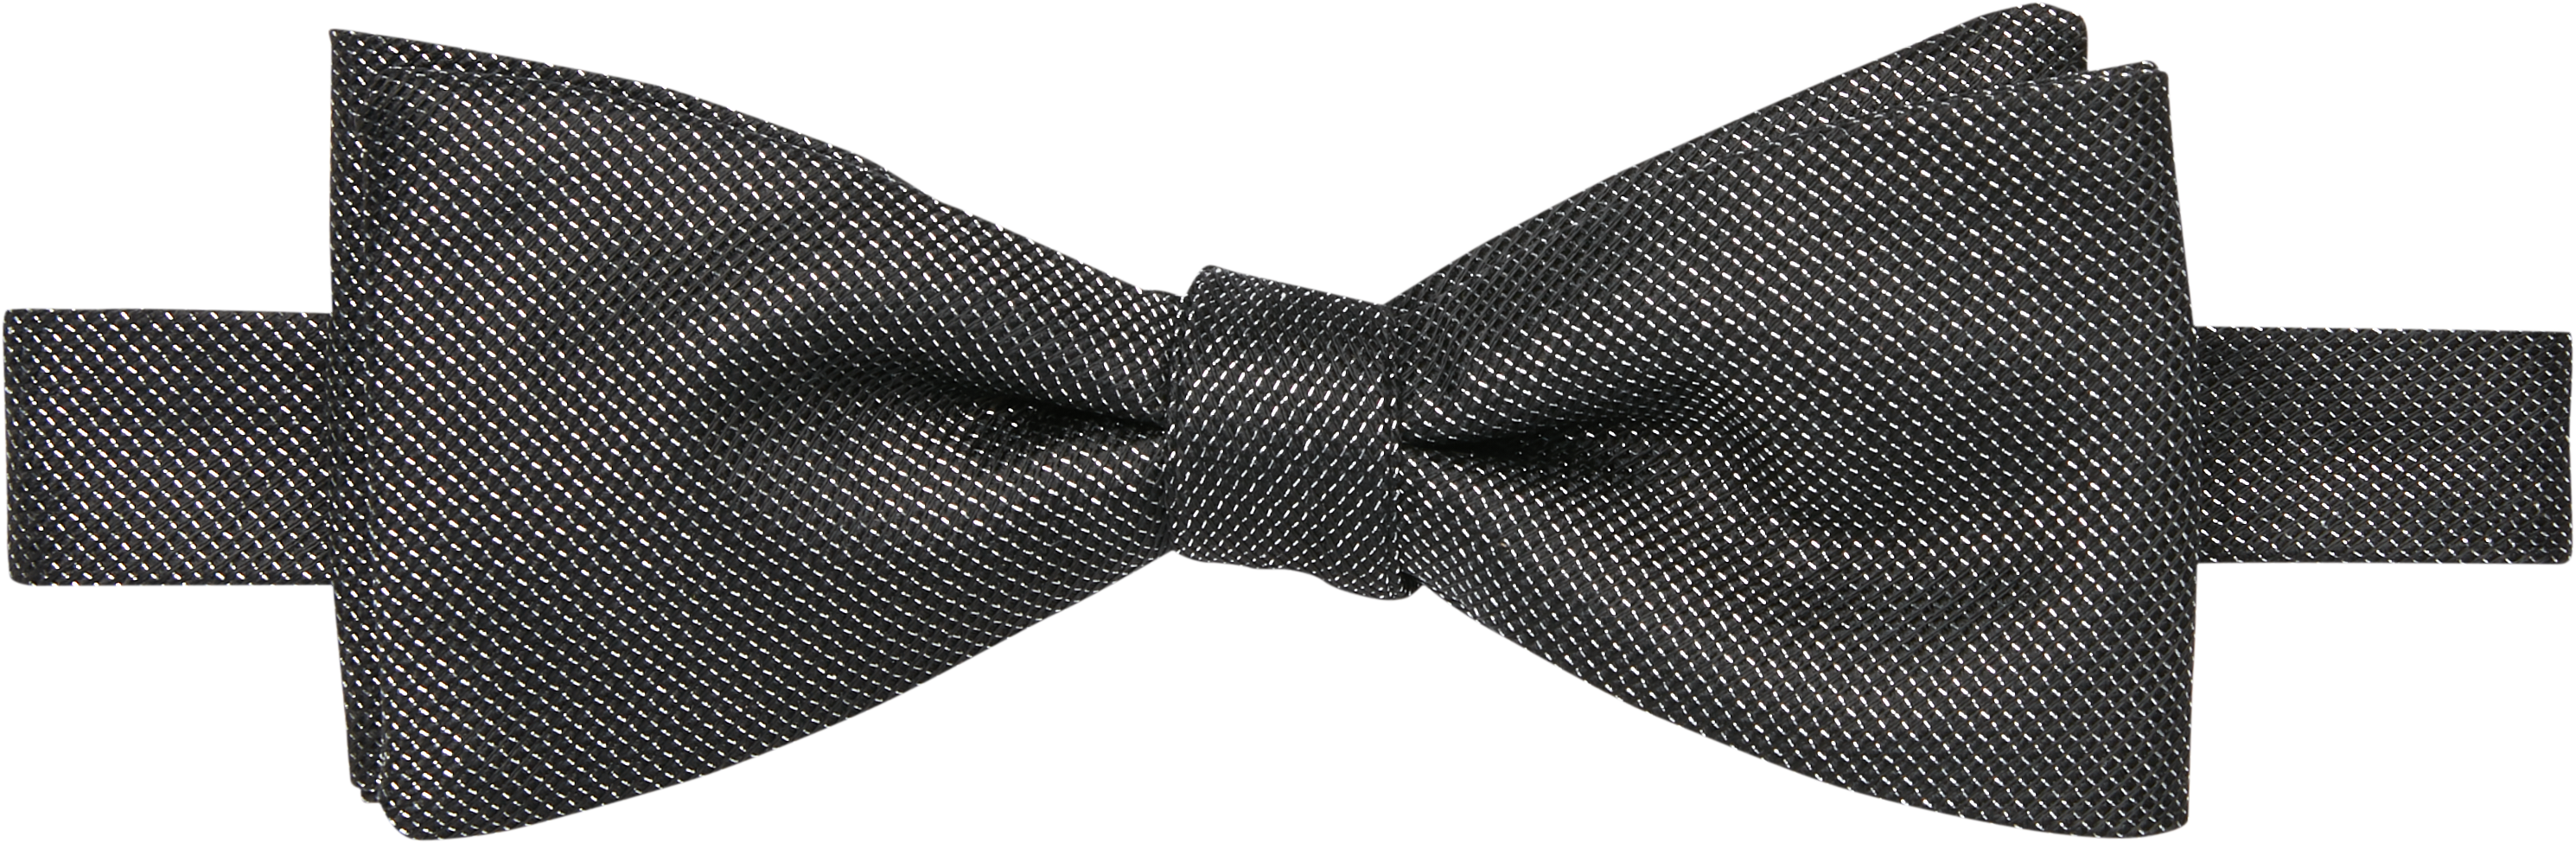 Egara Pre-Tied Bow Tie, Black - Men's Accessories | Men's Wearhouse